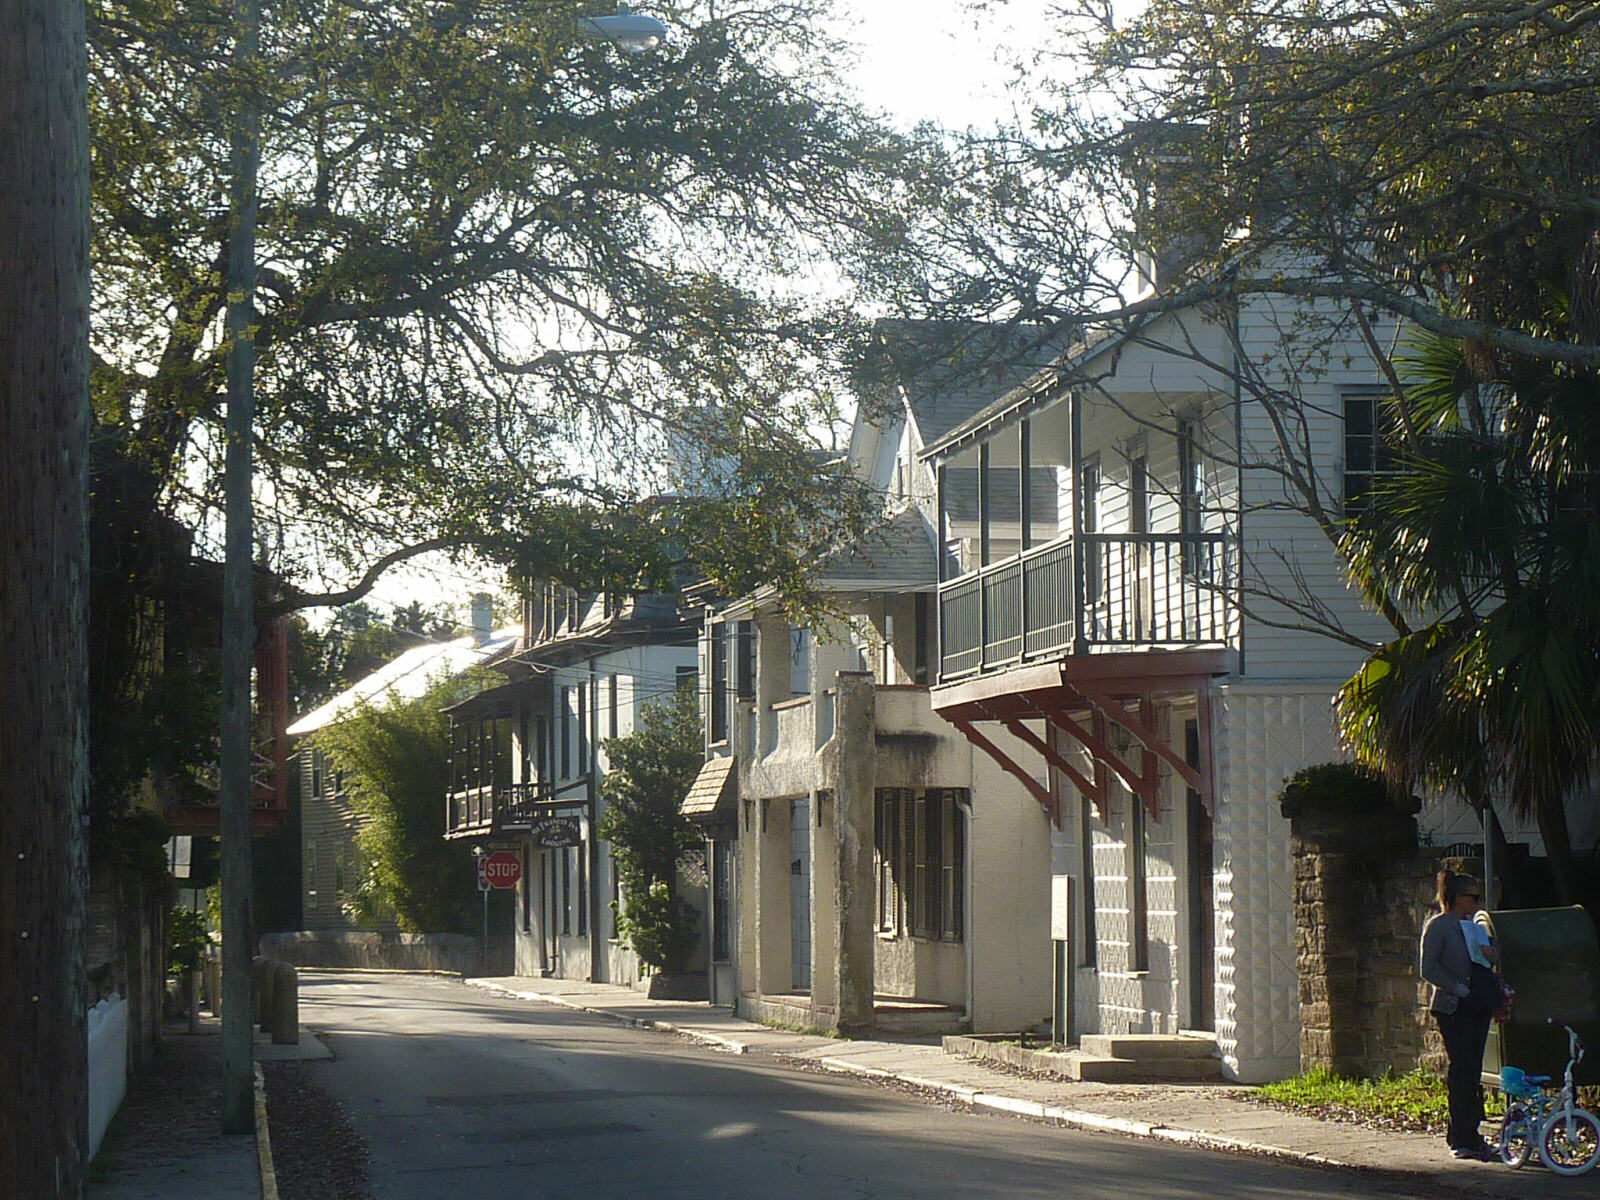 St Francis Street in Saint Augustine, Florida